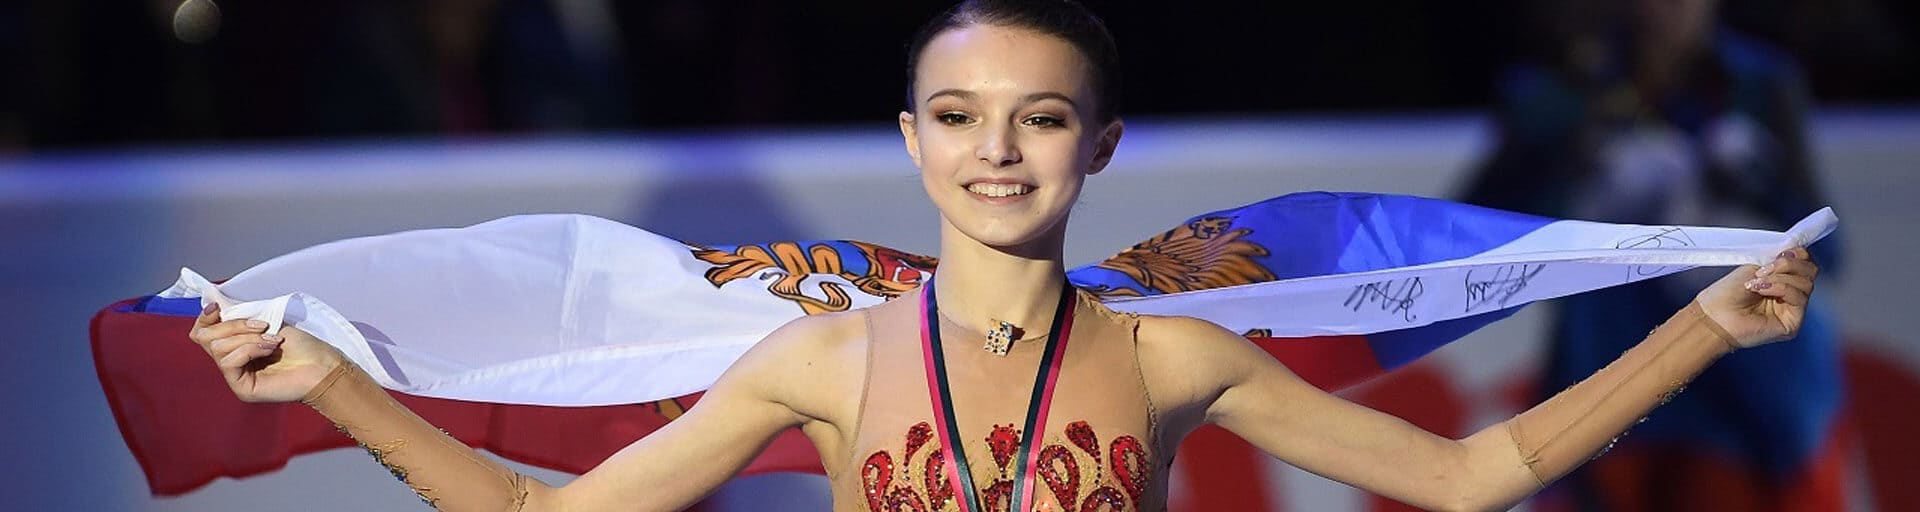 Анна Щербакова снялась с Гран-при в Москве